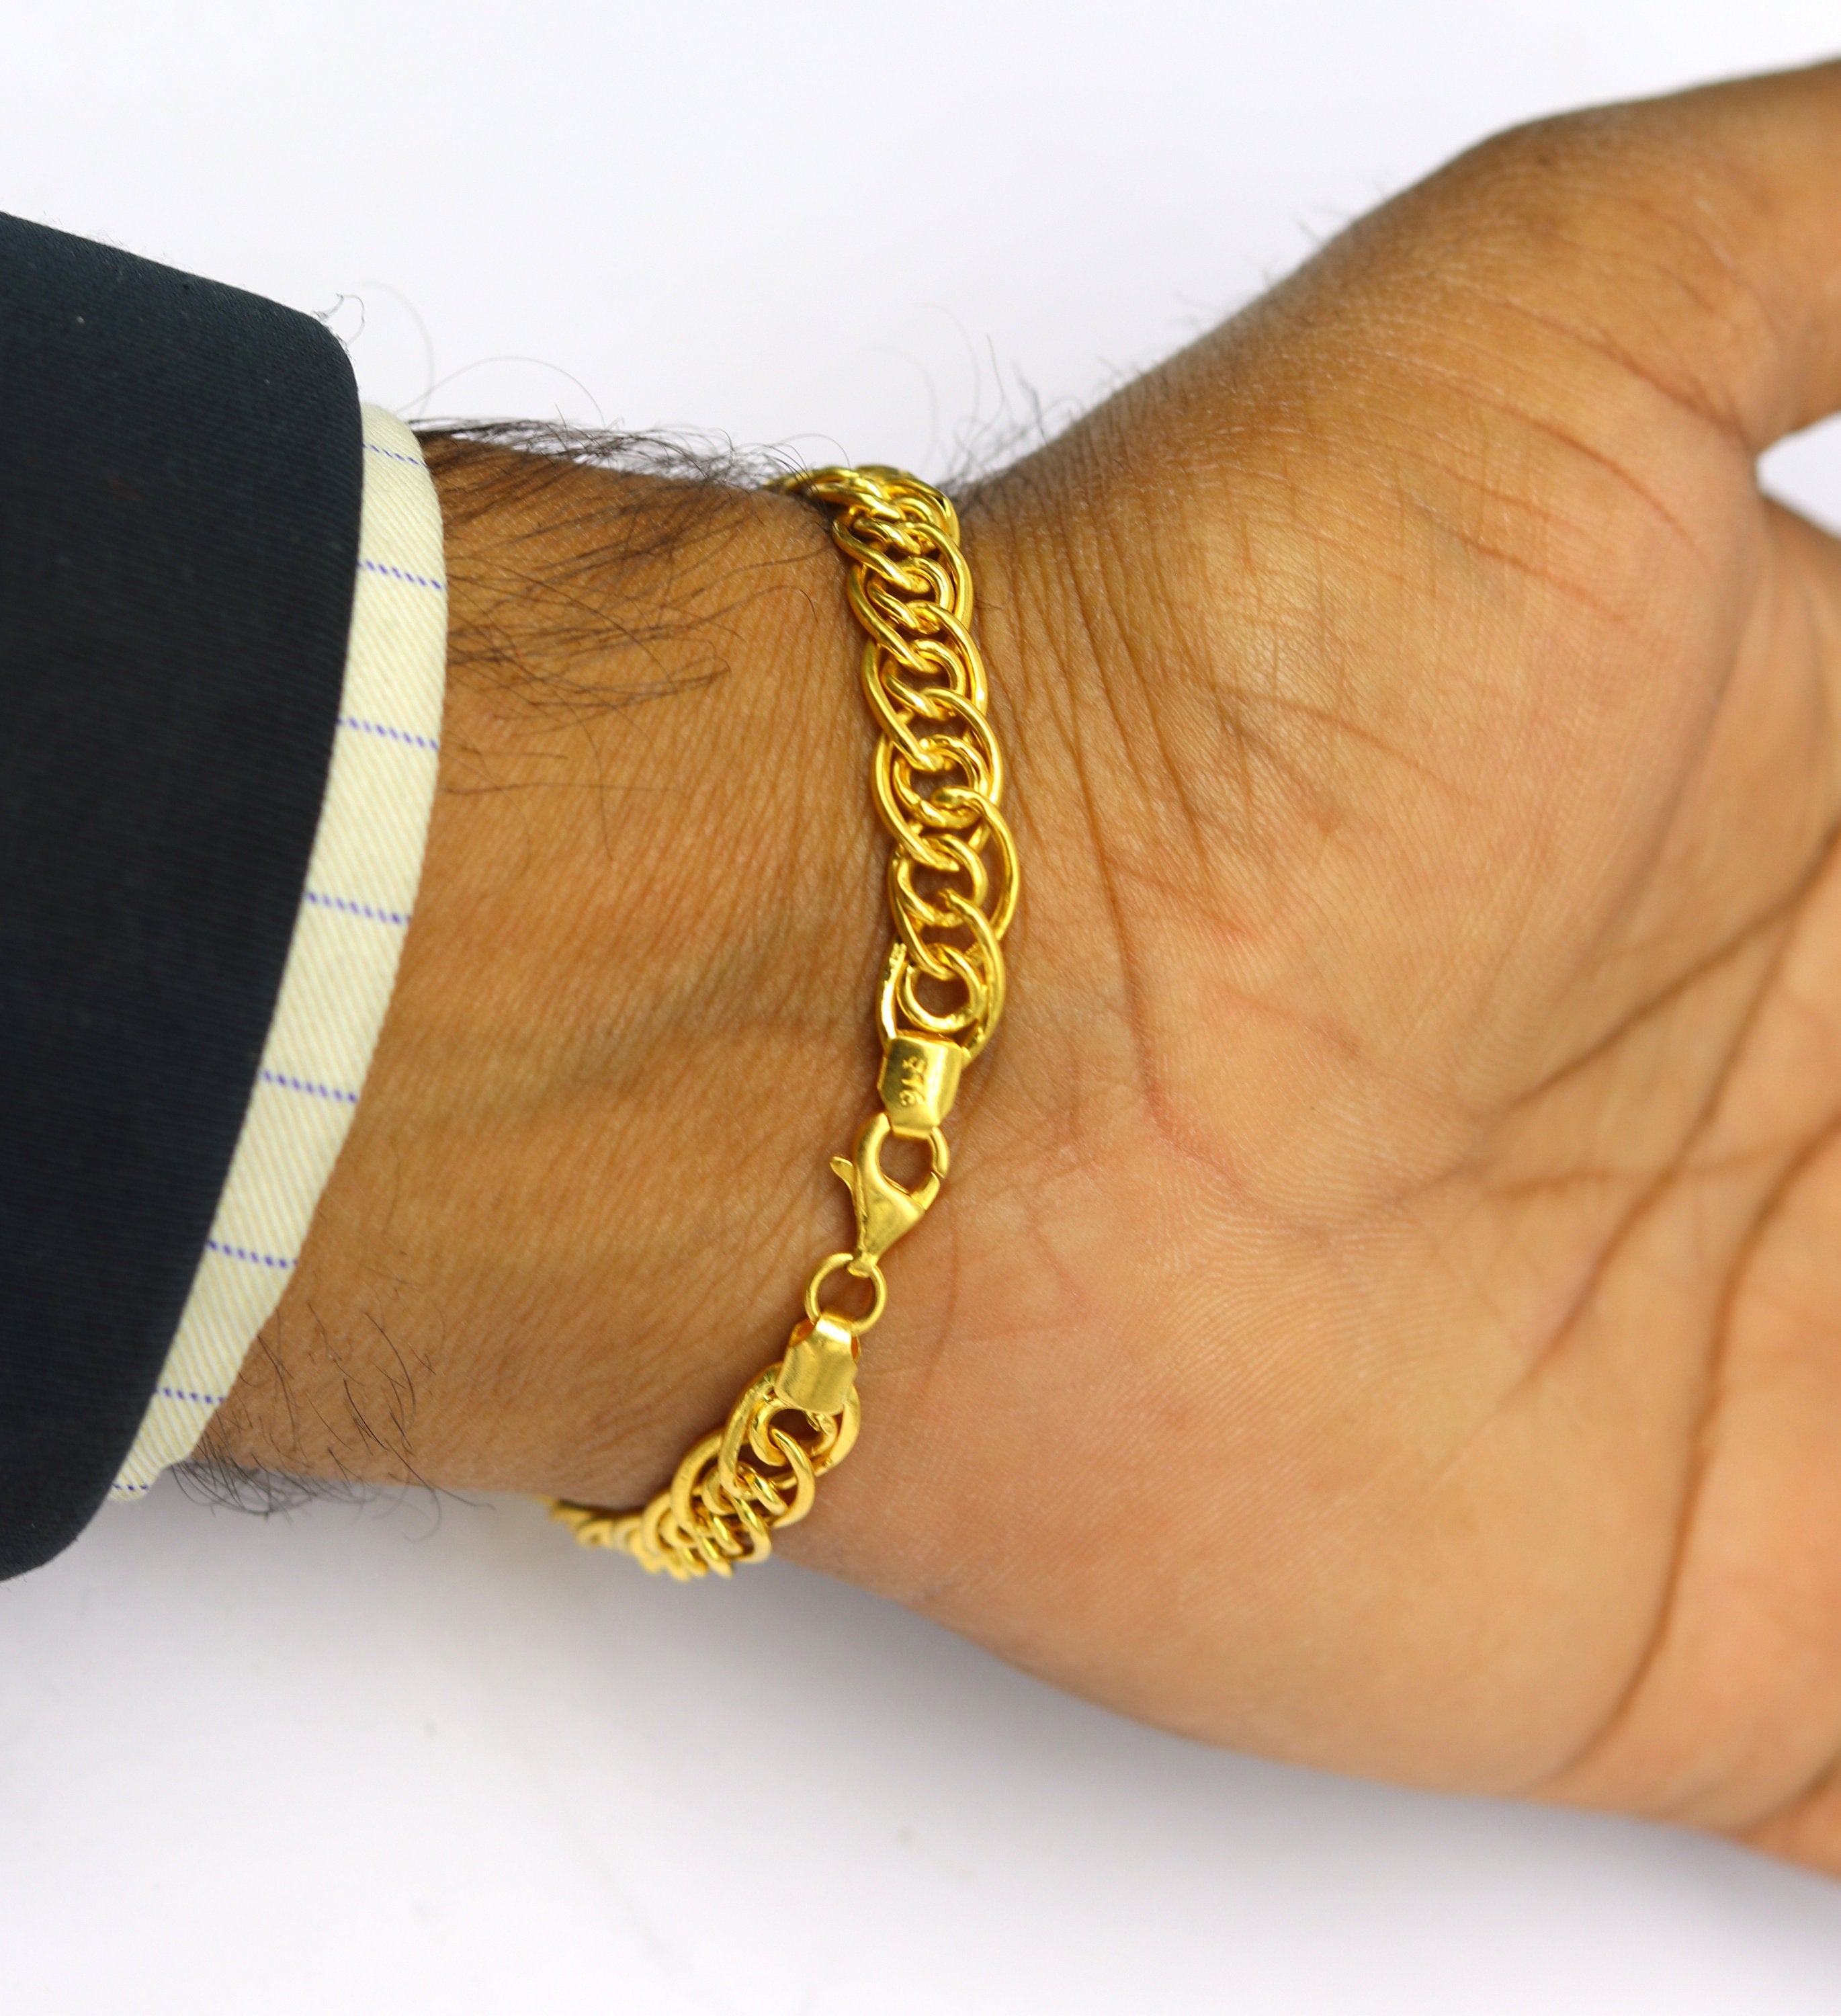 custom engraved hand bands and bracelets| Alibaba.com